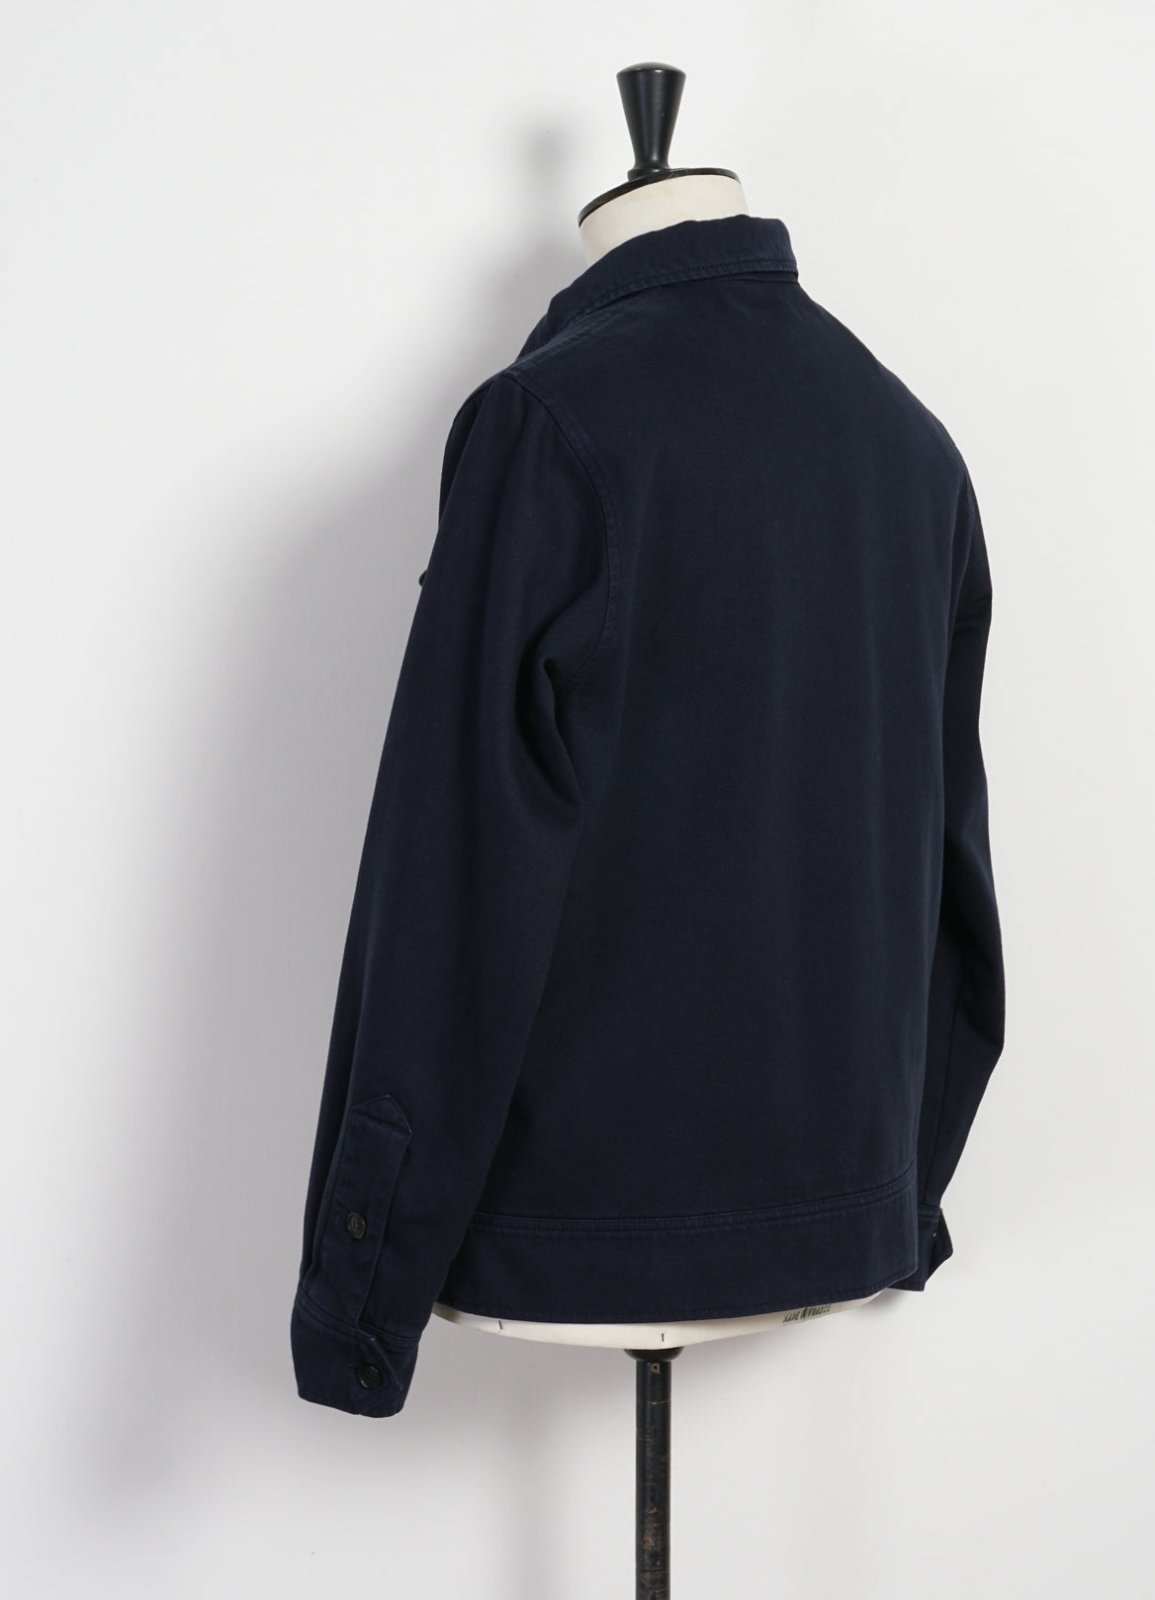 HANSEN GARMENTS - JARLE | Casual Zipper Jacket | Navy - HANSEN Garments